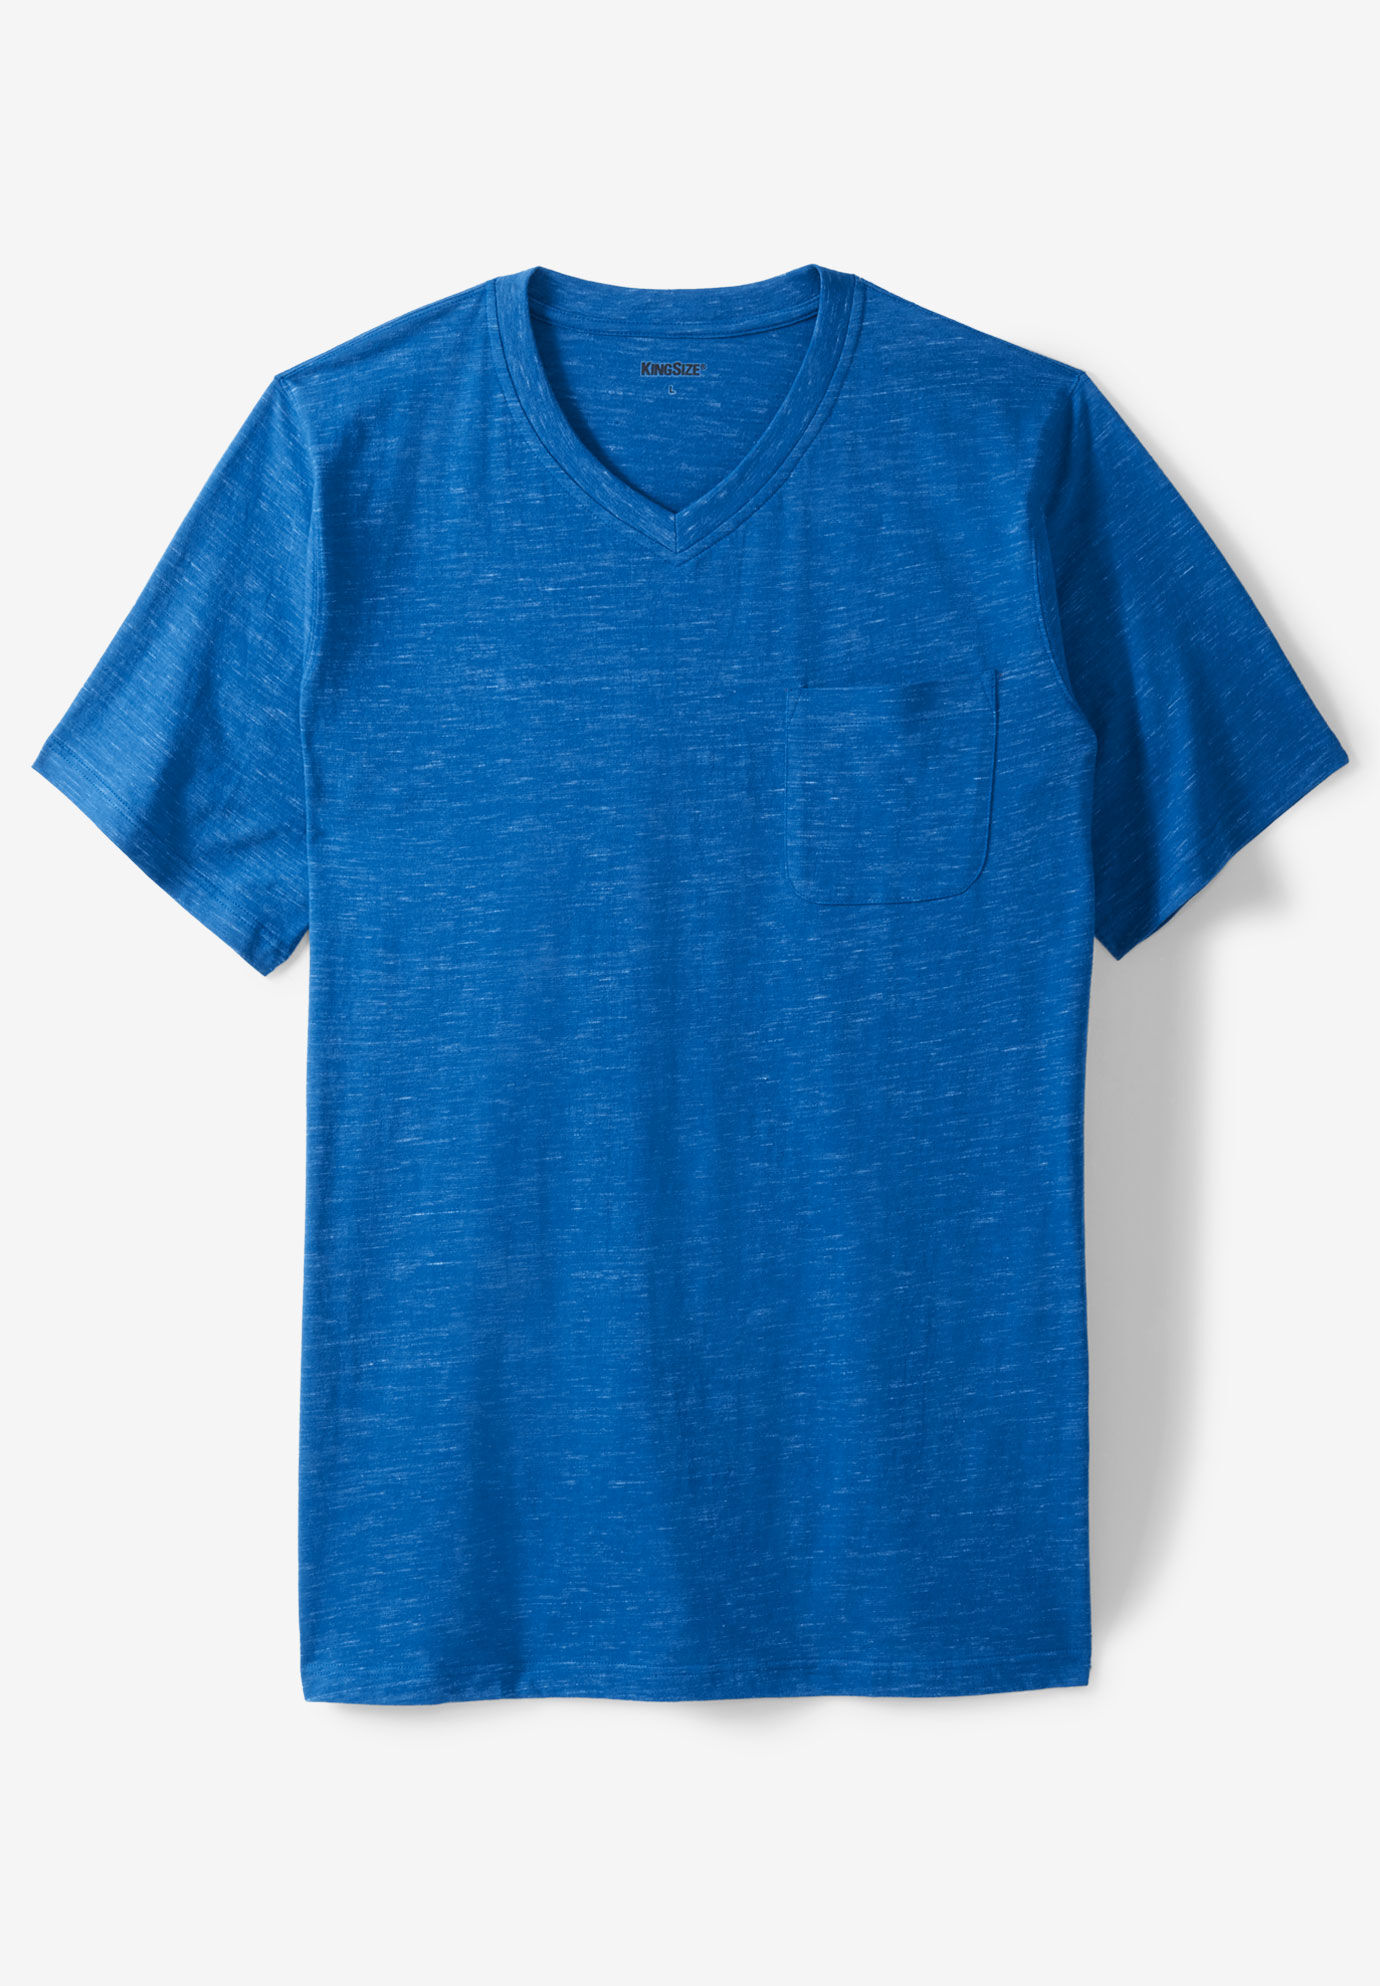 Blue King Tiger 84 Man V-Neck T Shirt Beach Tee Washed All Cotton T Shirts 